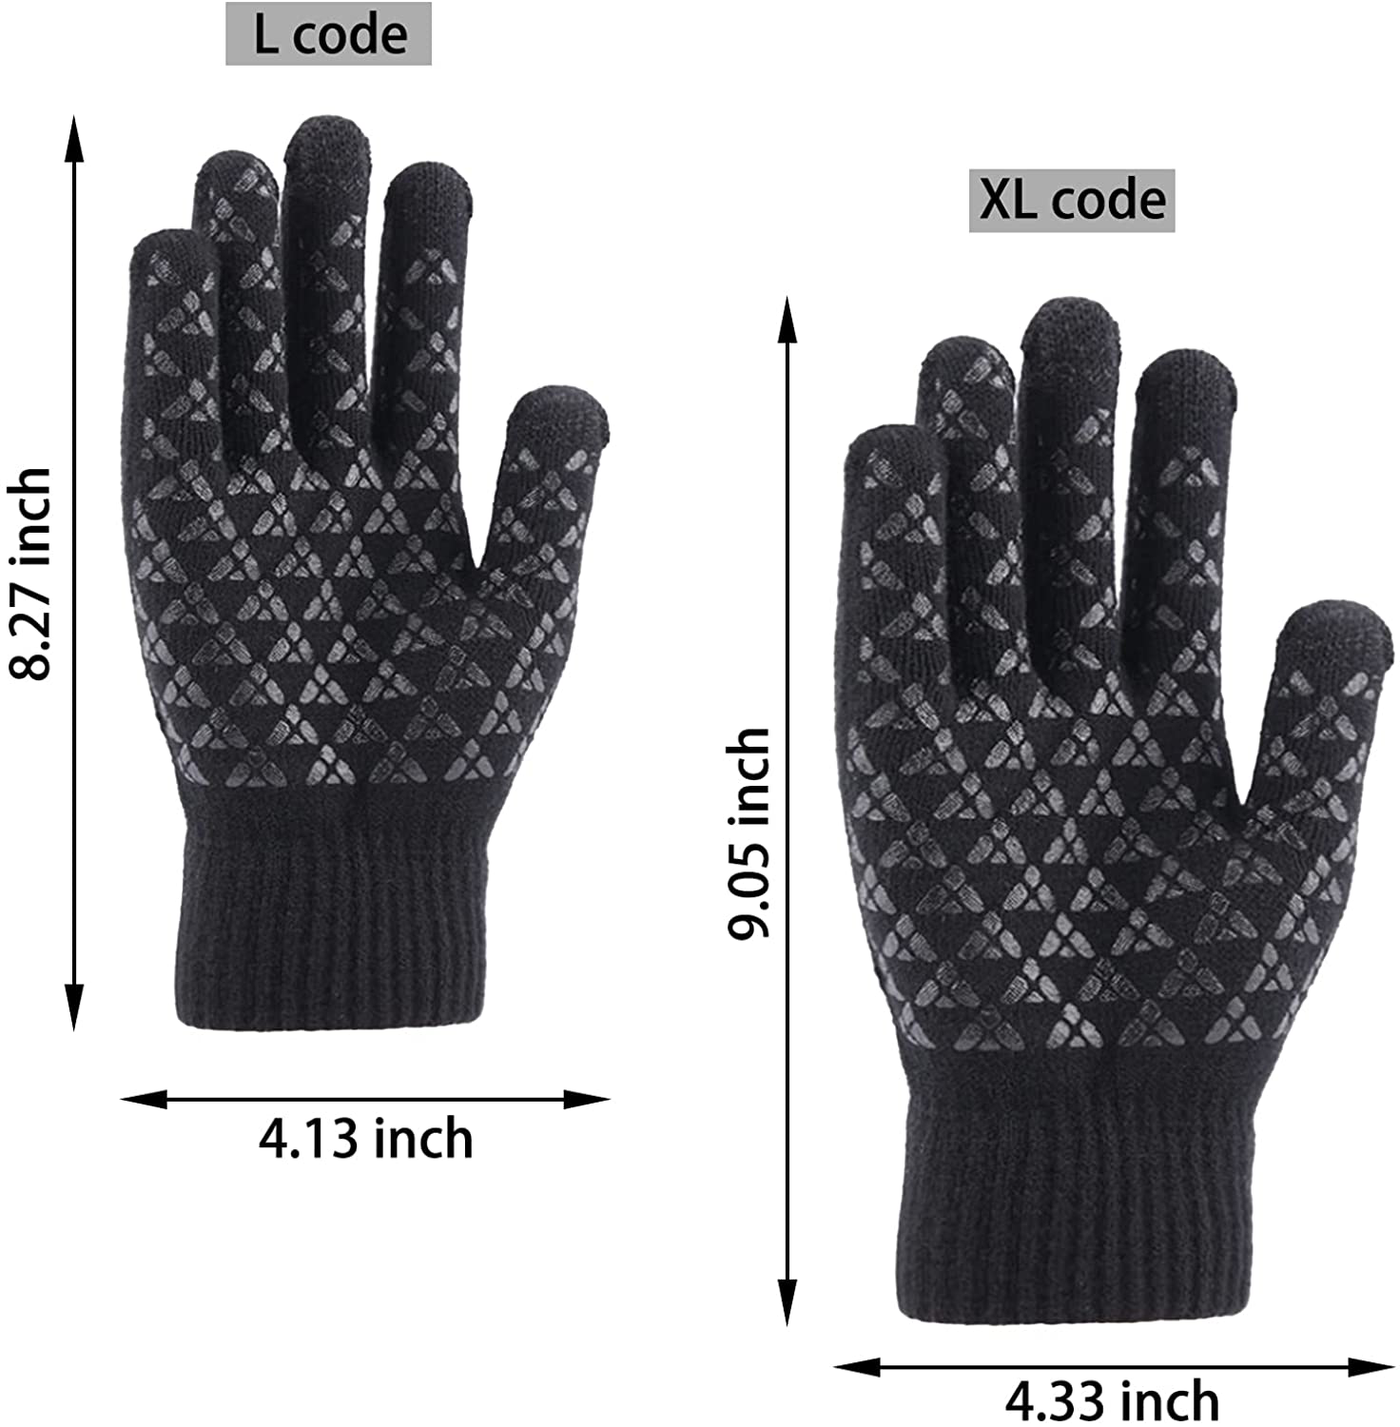 Andiker Winter Knit Gloves, Men Women Touch Screen Cold Weather Gloves, Full Finger Soft Warm Anti Slip Gloves for Hiking